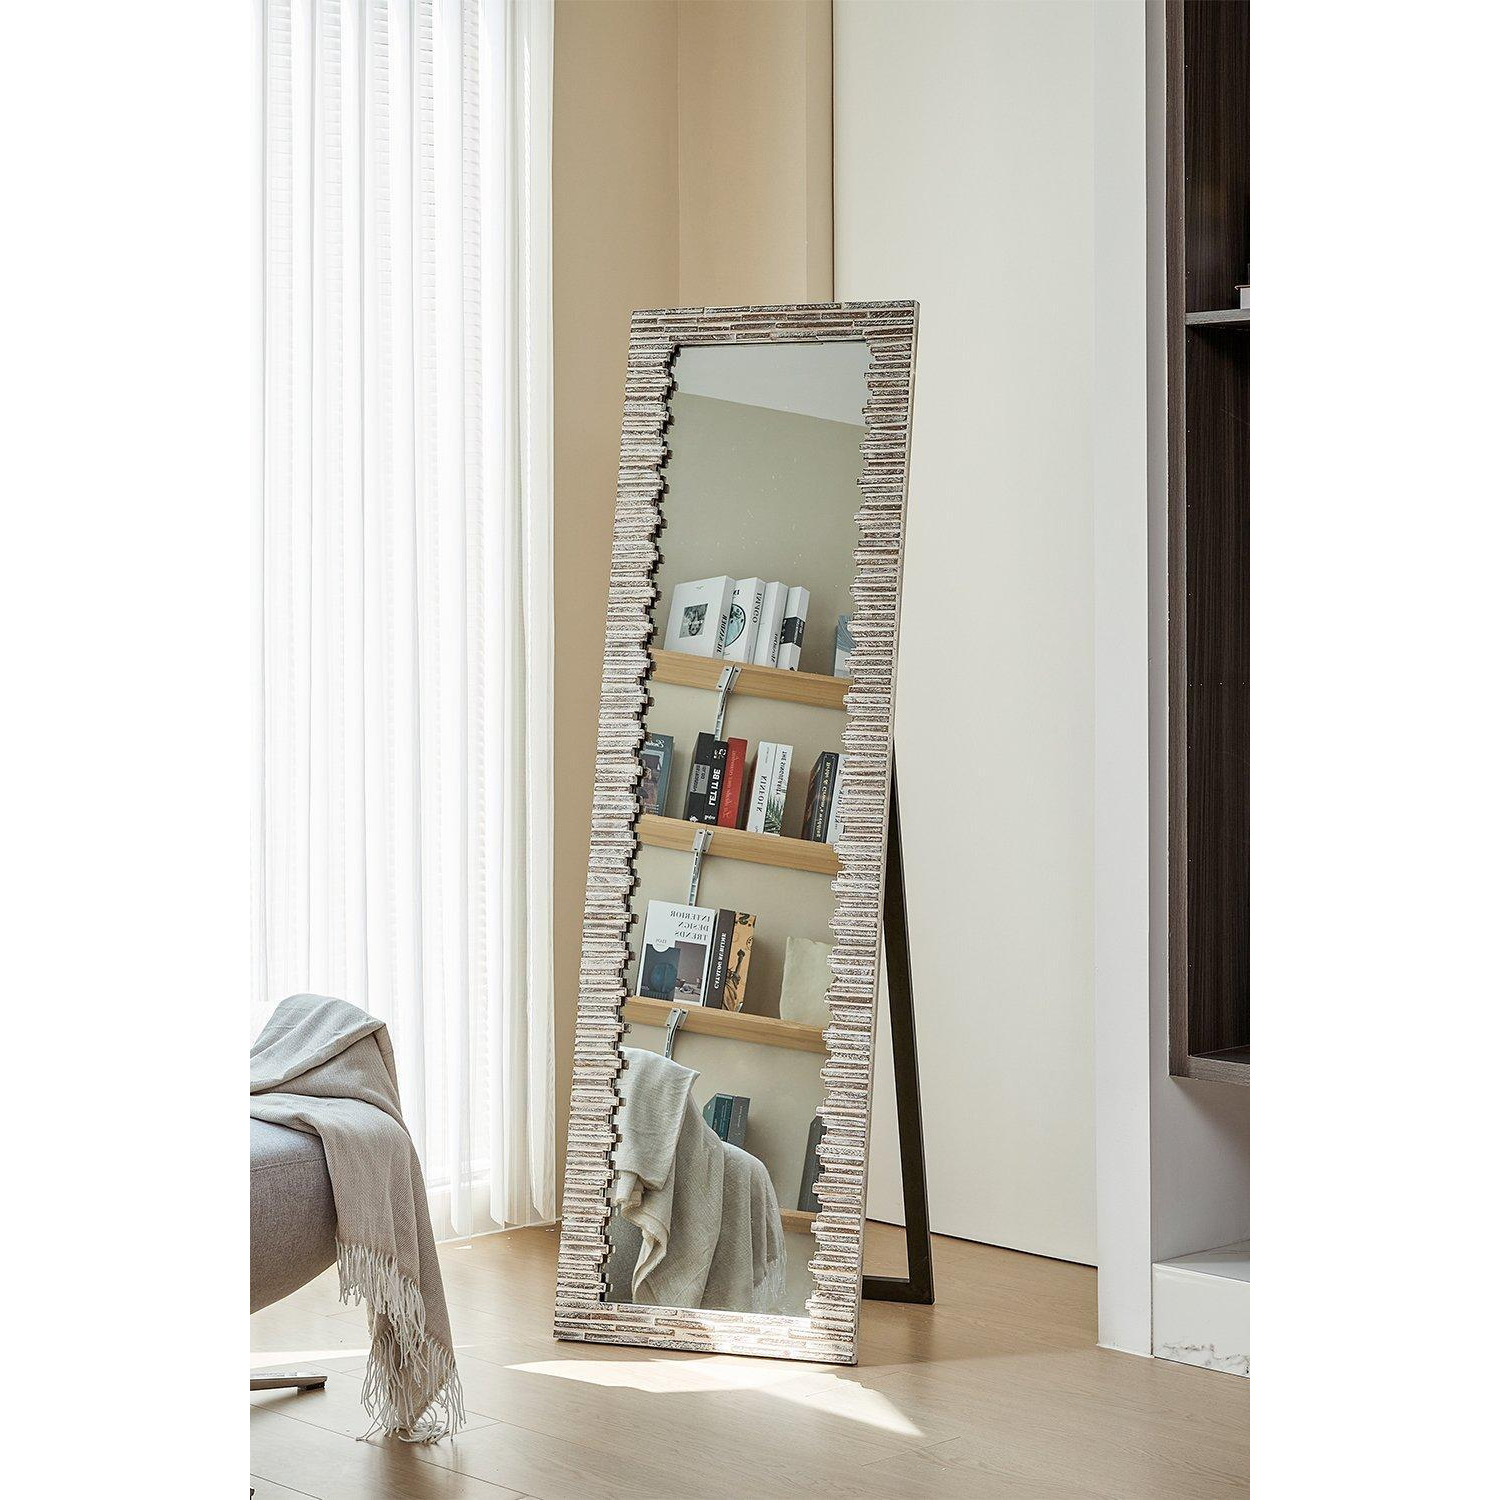 50*170cm Rectangle Grey Full-Length Floor Mirror - image 1